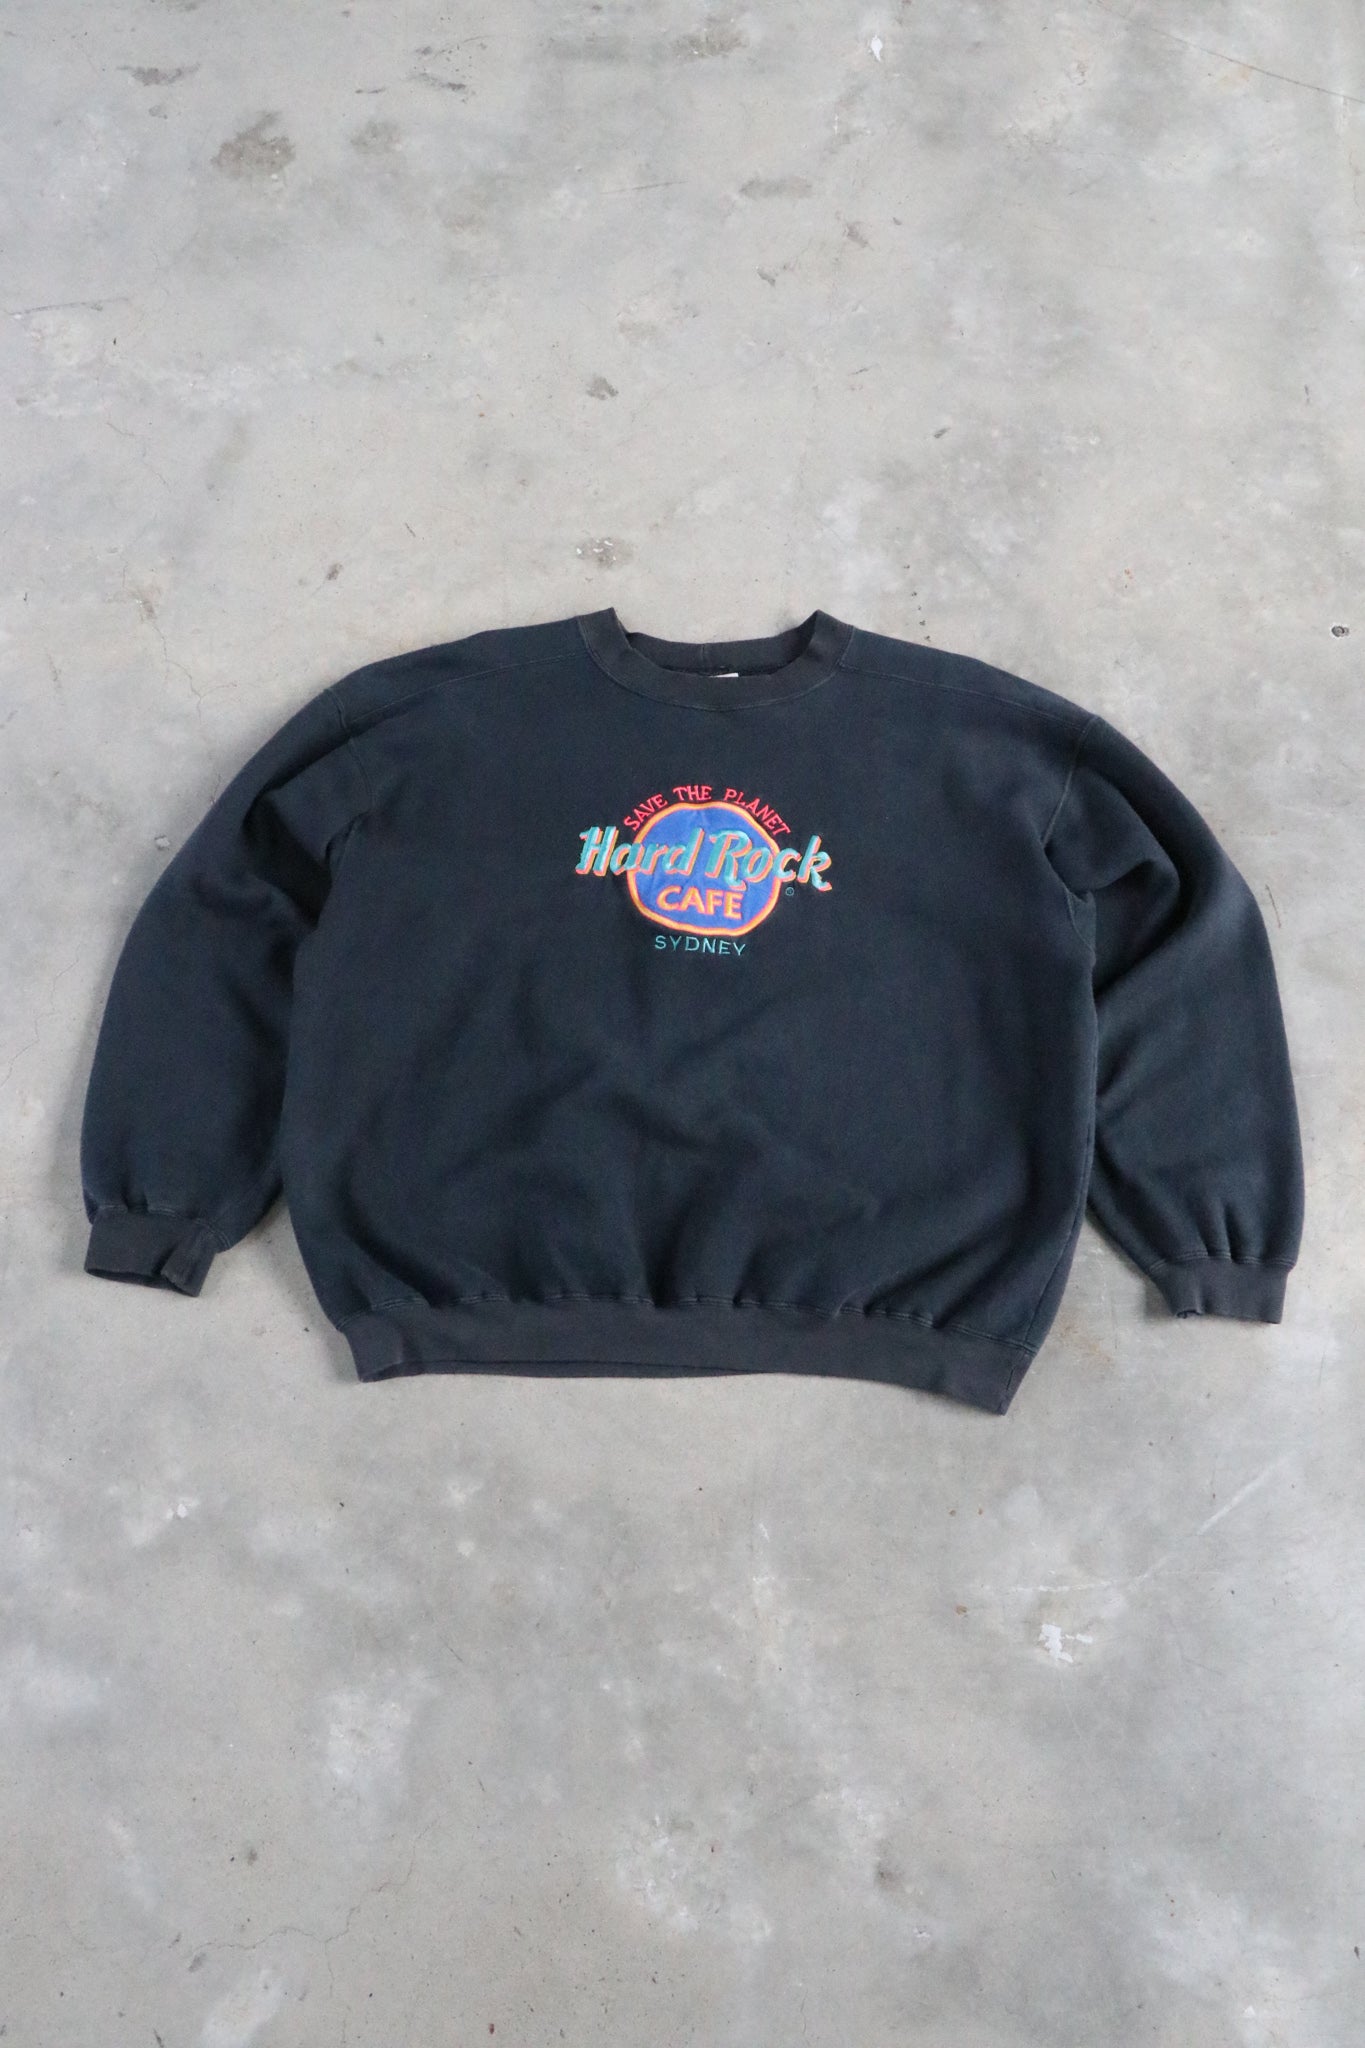 Vintage Hard Rock Cafe Sydney Sweater XL